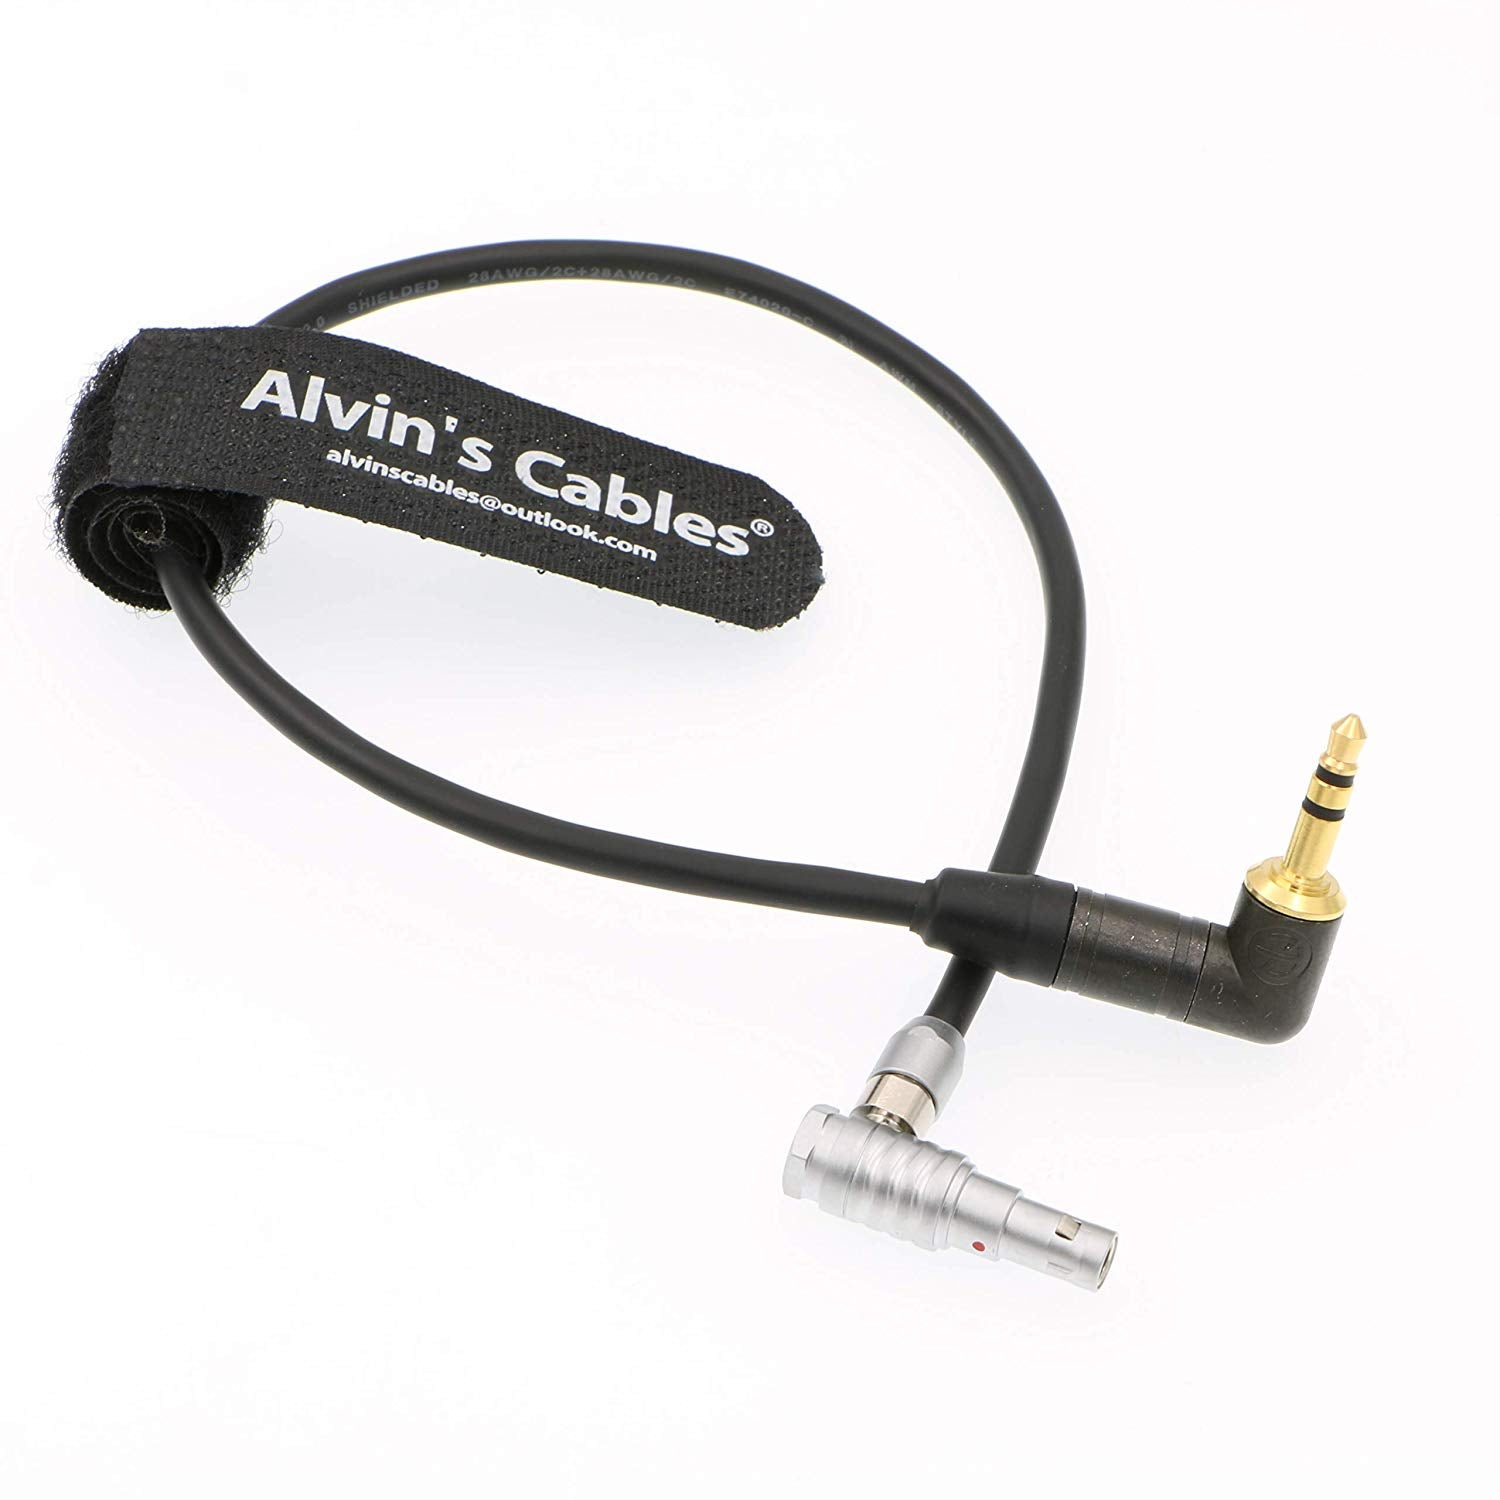 Alvin's Cables 5-poliger rechtwinkliger Stecker auf rechtwinkliges 3,5-mm-TRS-Audiokabel für Z CAM E2-Kamera